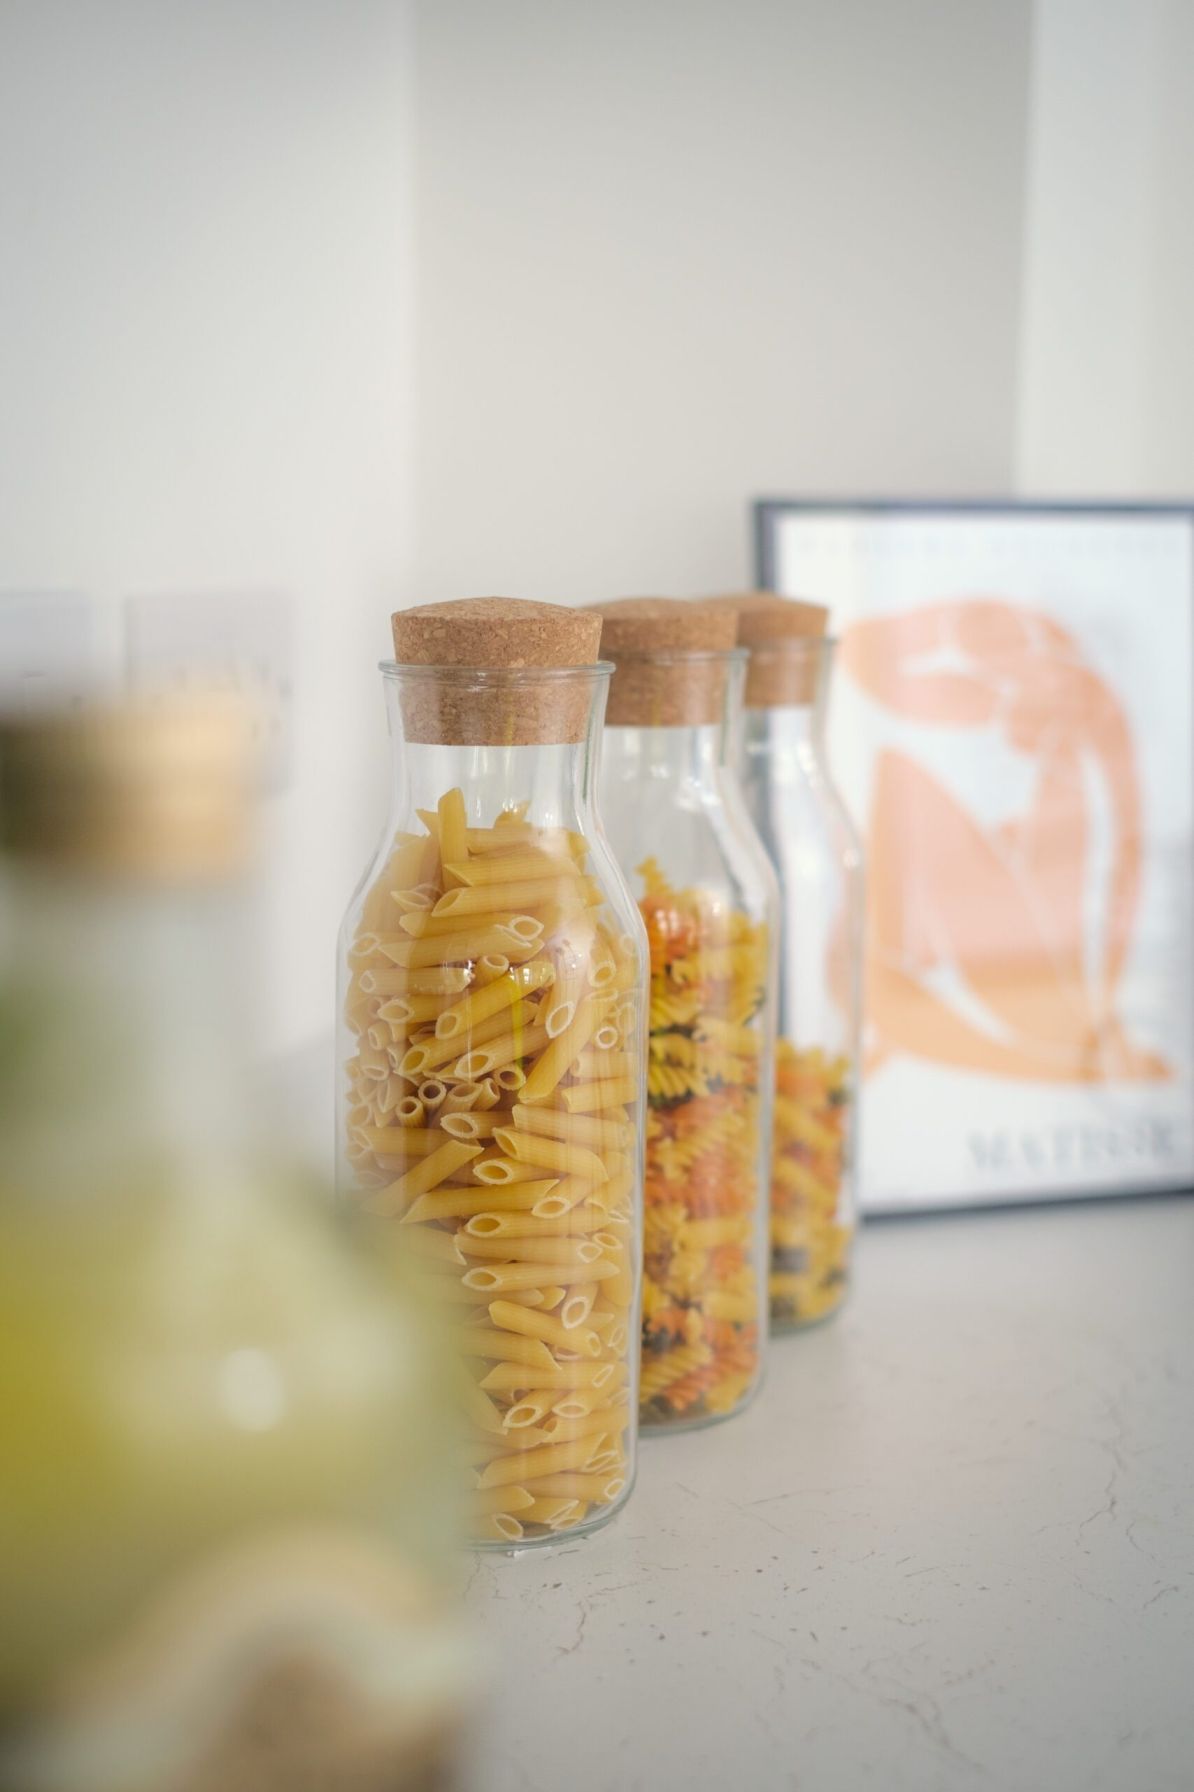 Bryan House pasta in glass bottles